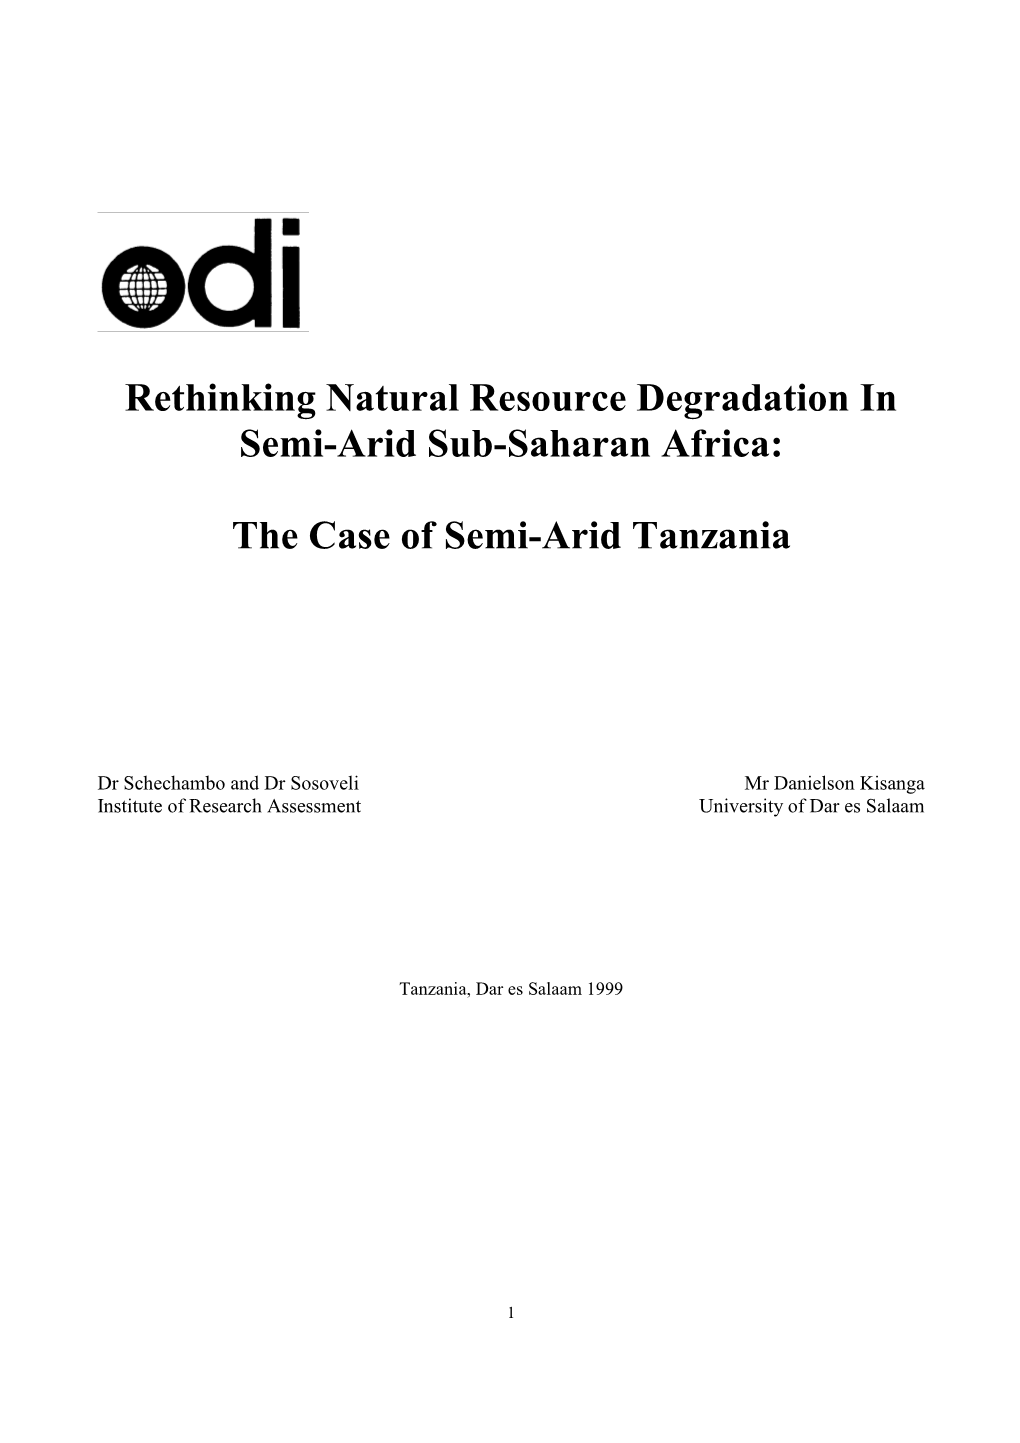 Rethinking Natural Resource Degradation in Semi-Arid Sub-Saharan Africa